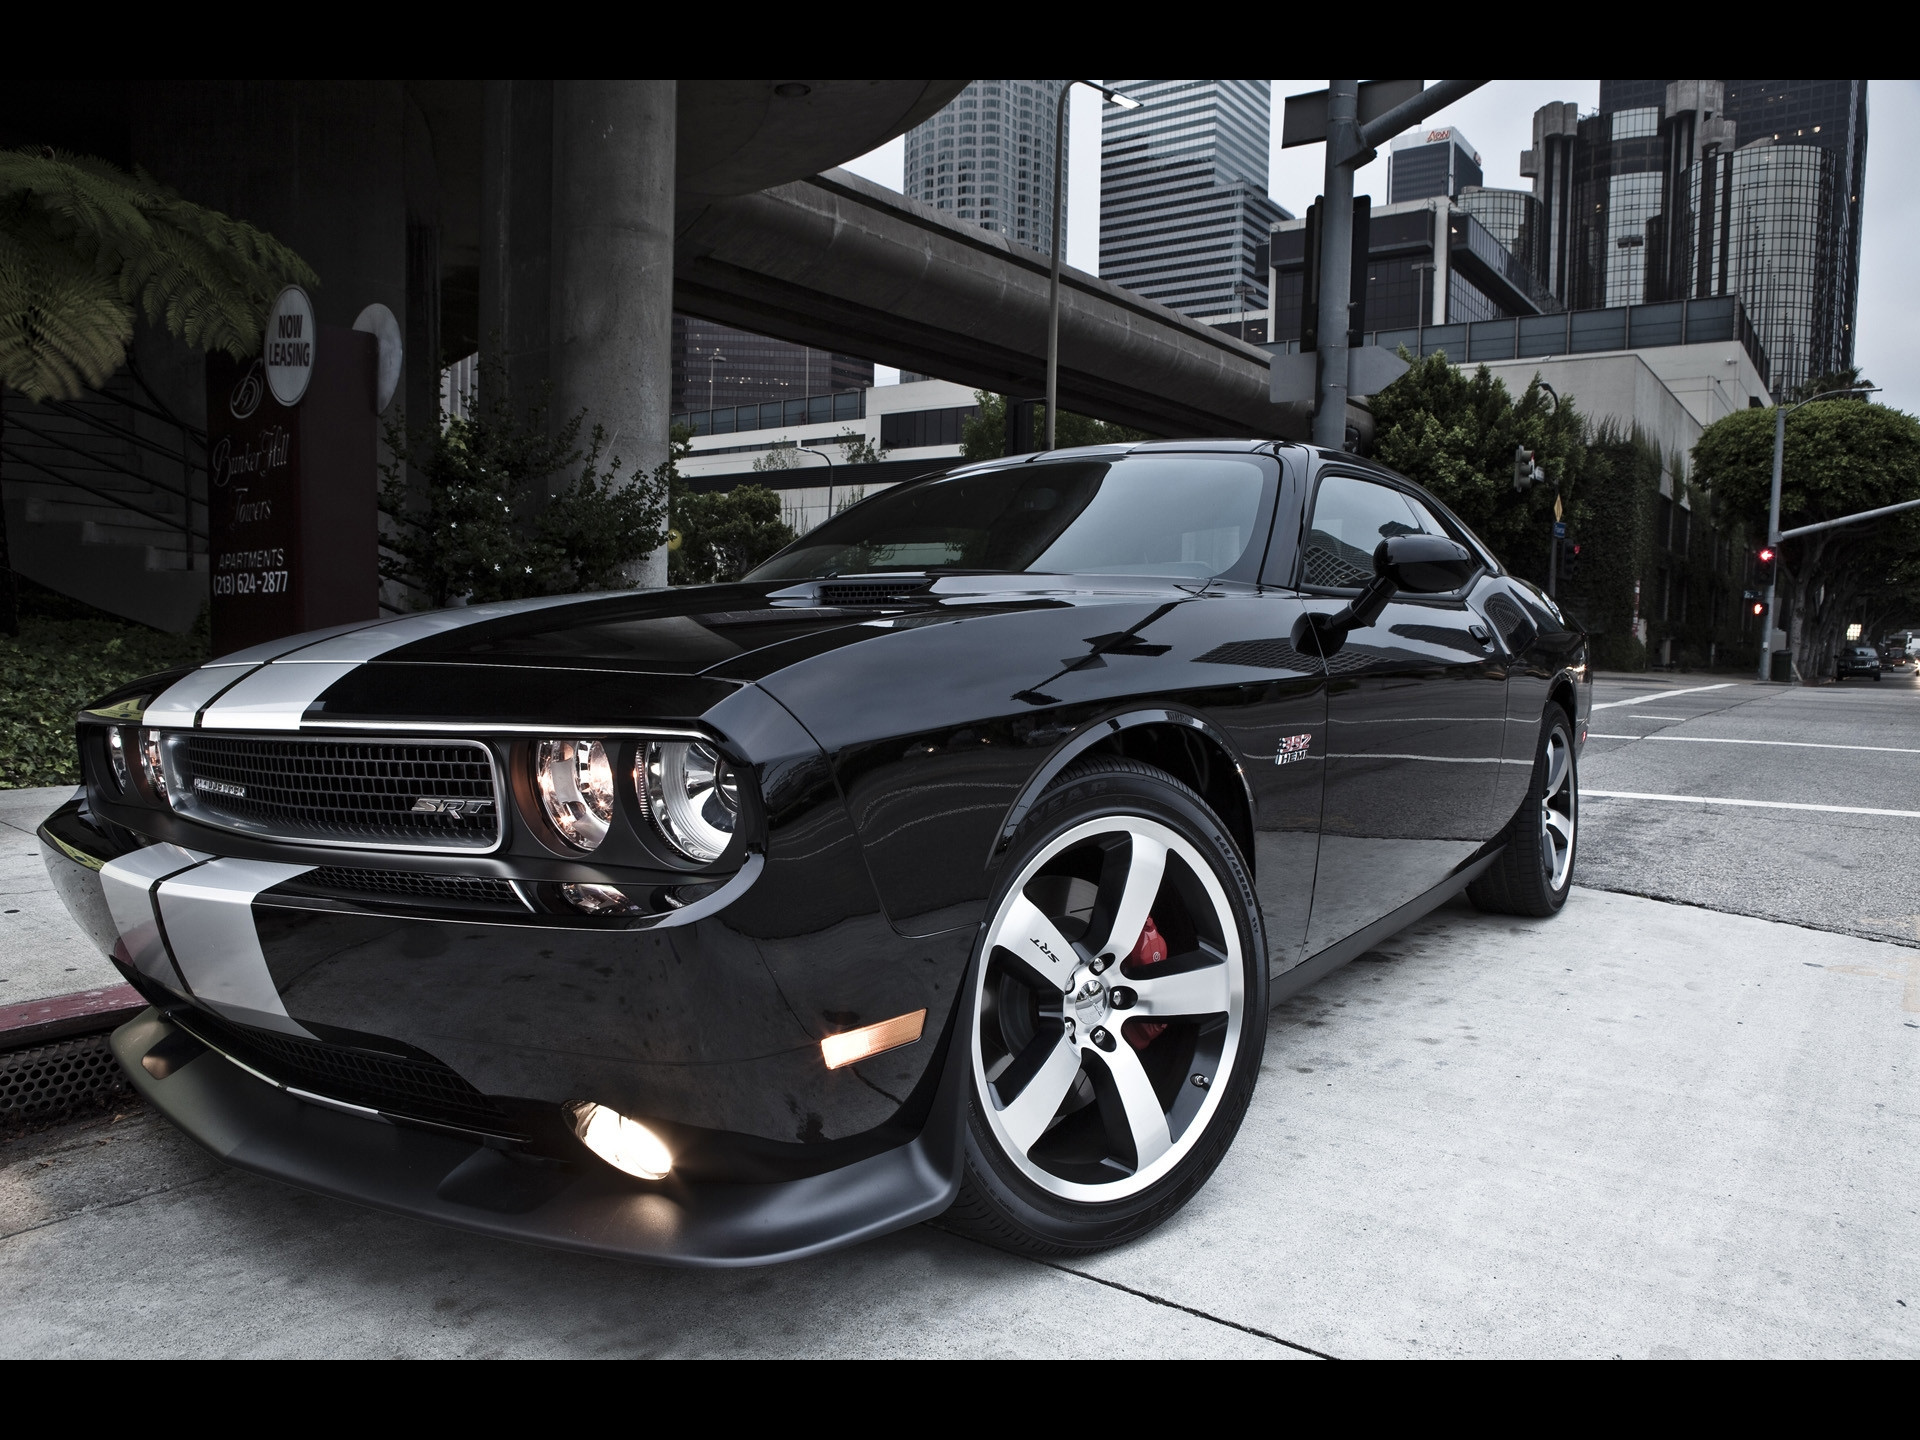 Dodge Challenger Background Wallpaper Photo Download ...